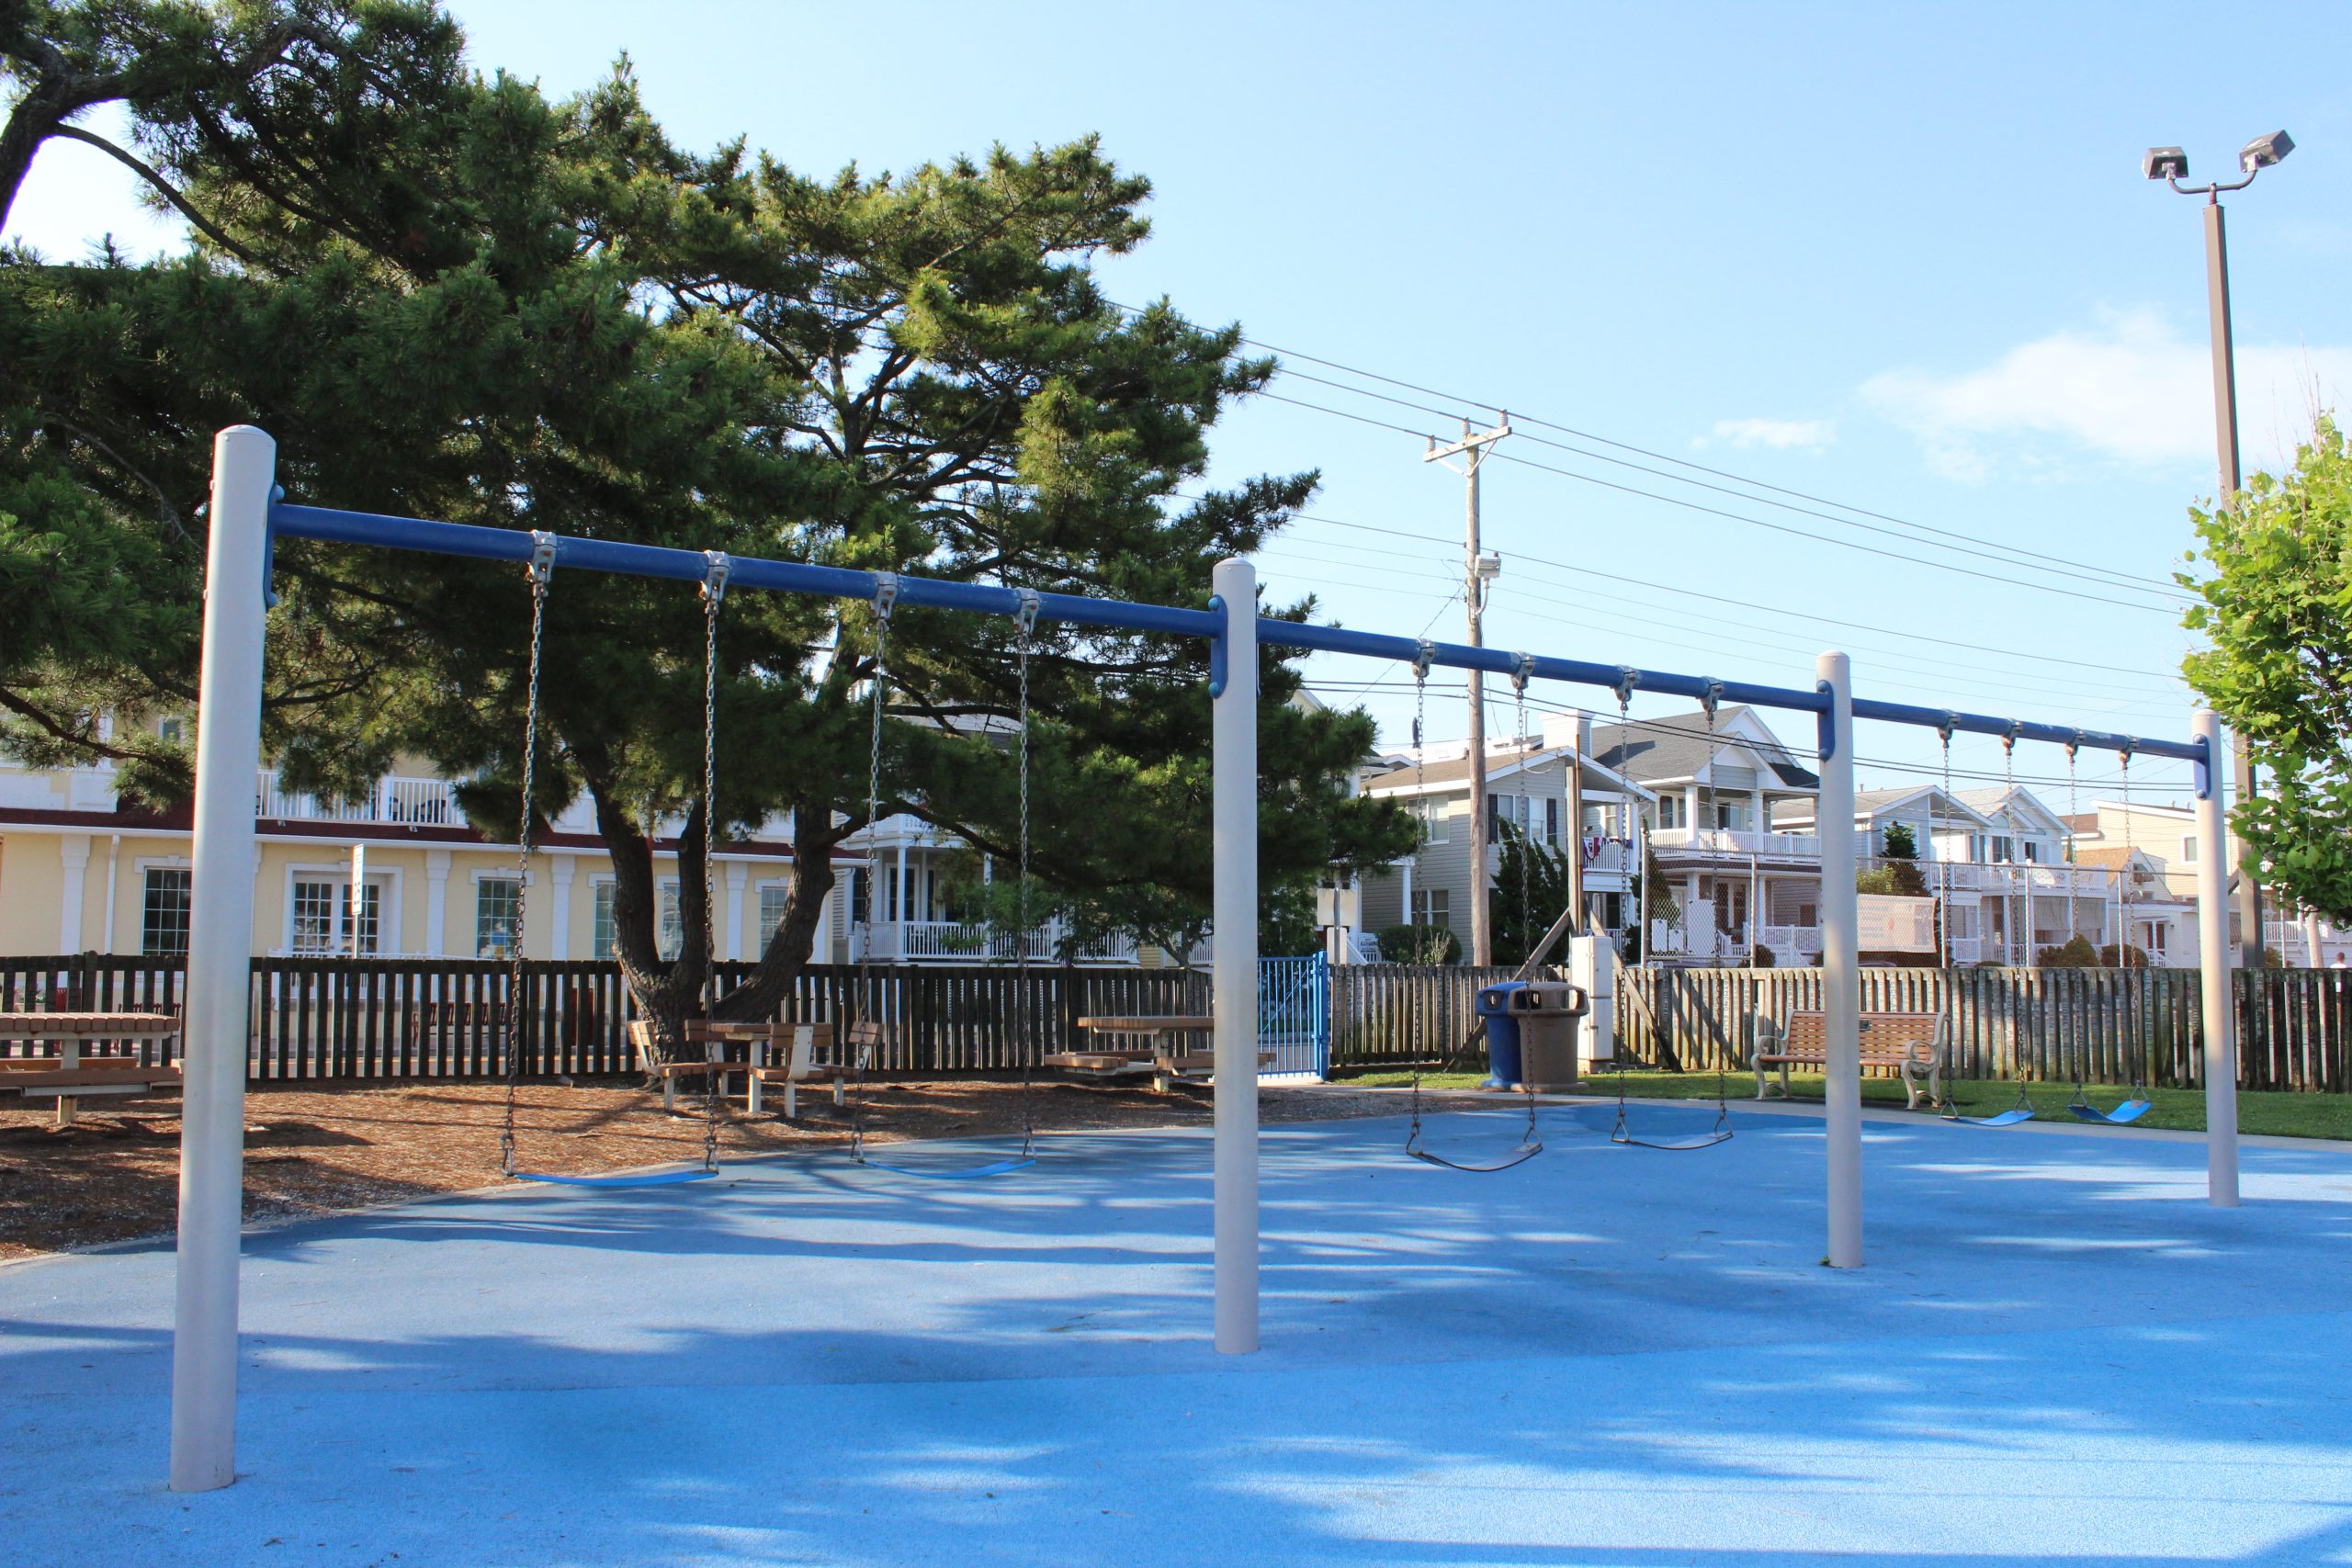 Sandcastle Park Playground in Ocean City NJ traditional swings horizontal